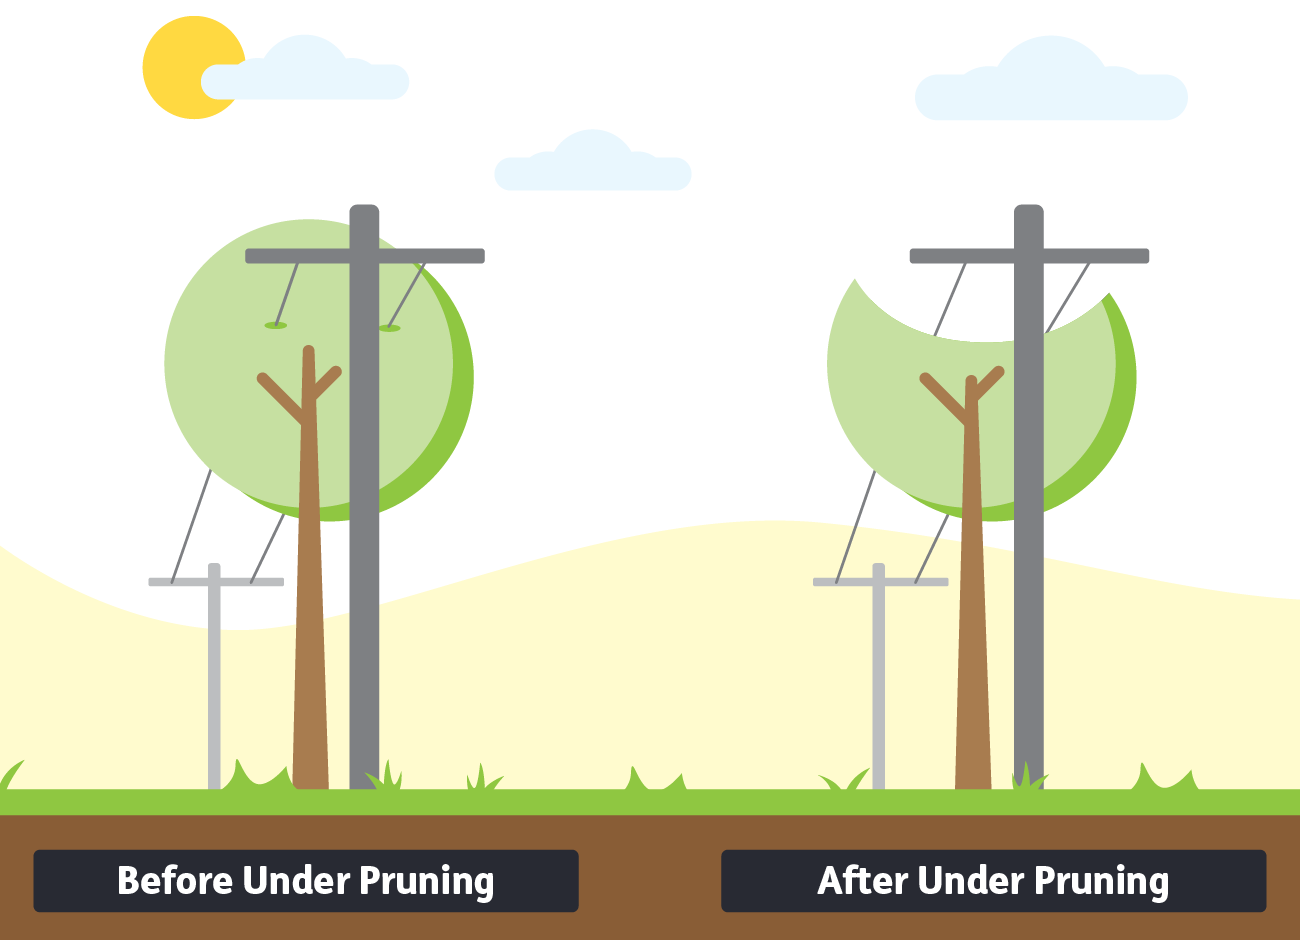 Graphic depicting under pruning technique